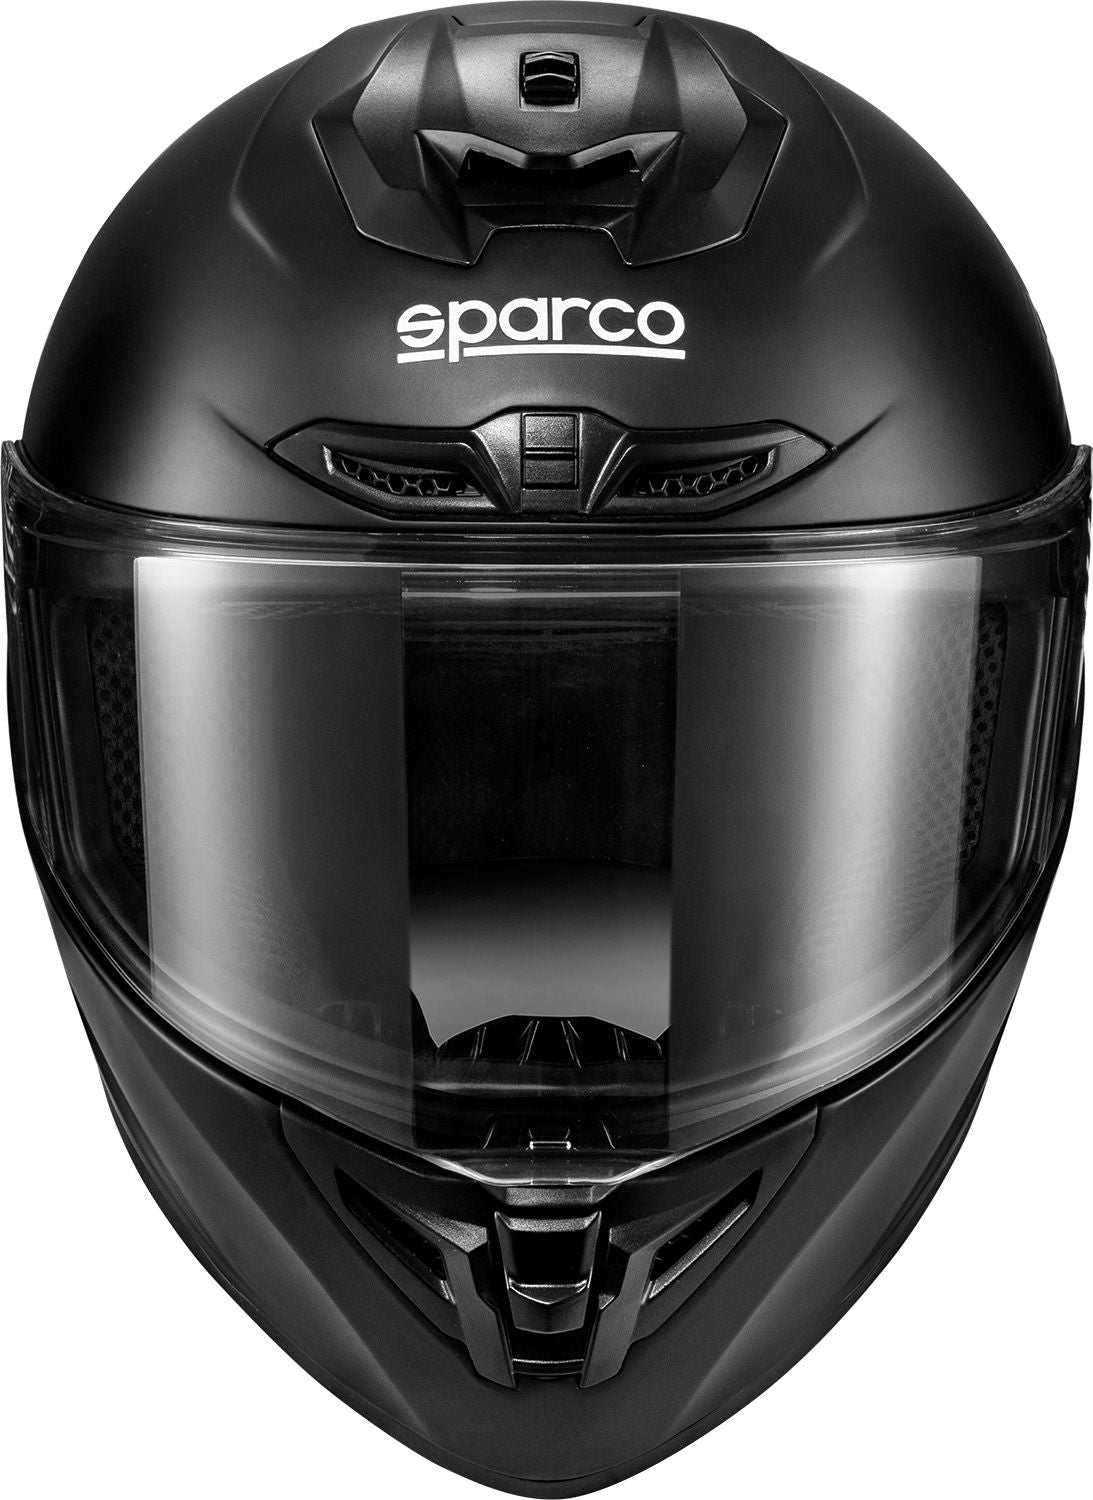 Sparco Helmet X-Pro, Black